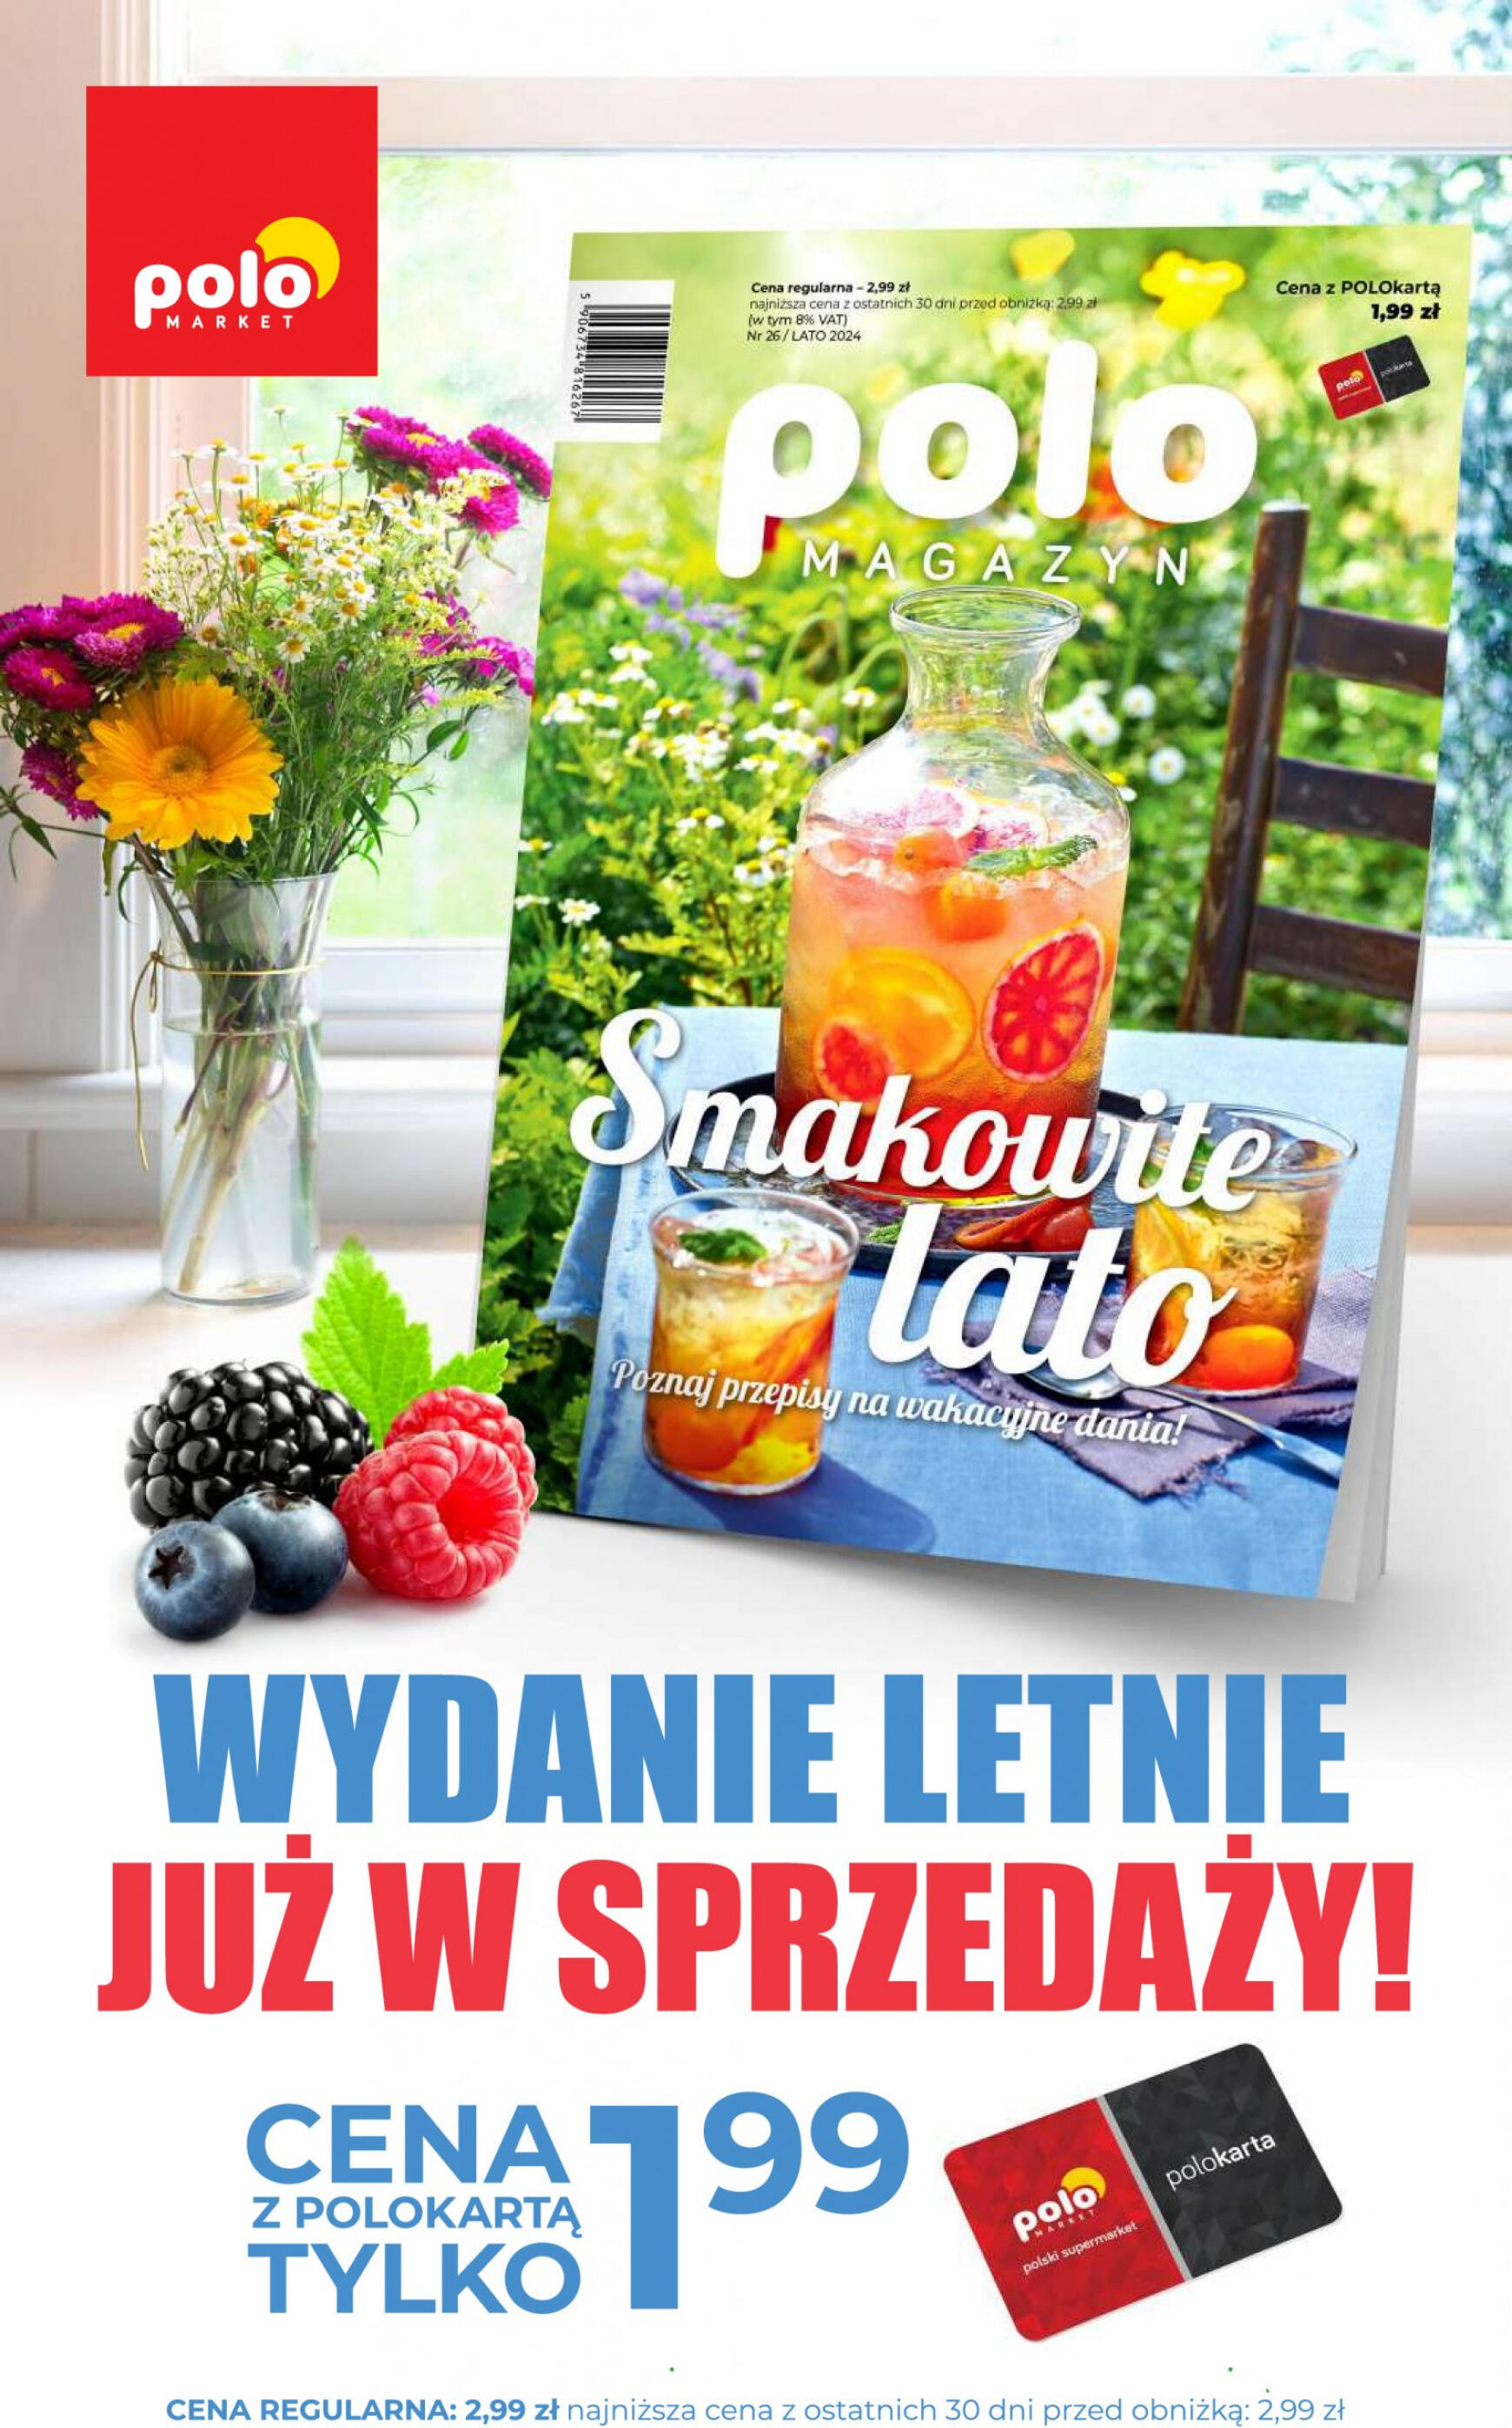 polomarket - POLO market gazetka aktualna ważna od 05.06. - 11.06. - page: 50